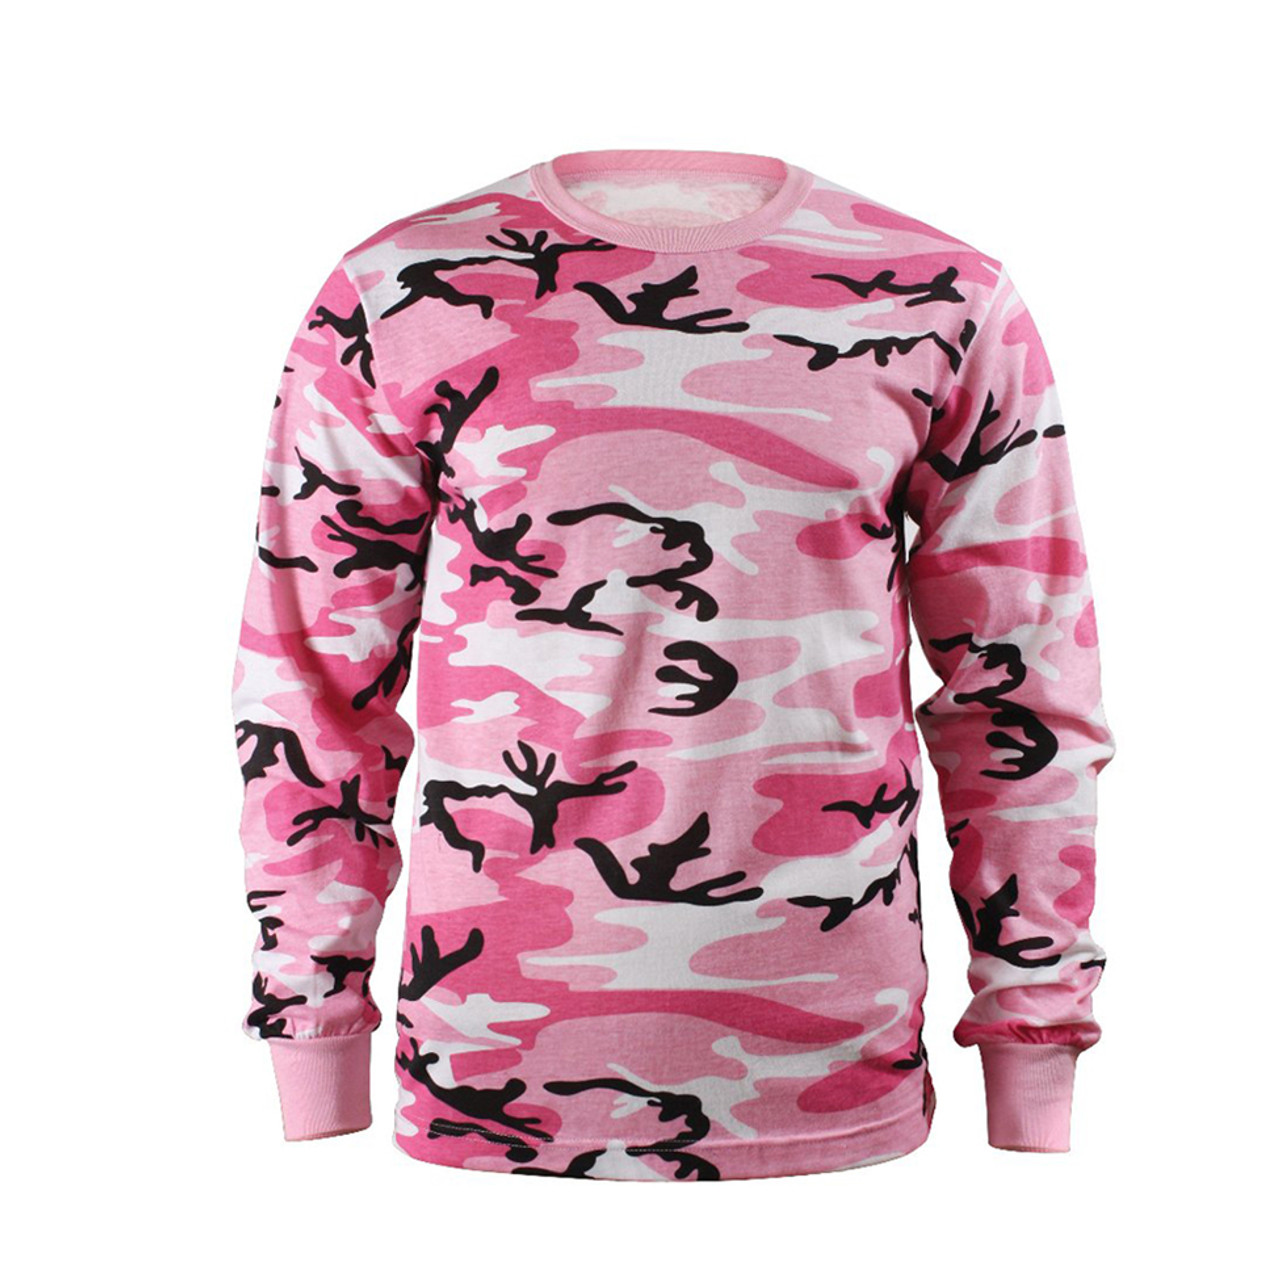 LA Rams City Of Champions Pink Camo T Shirt. Great Souvenir! Large